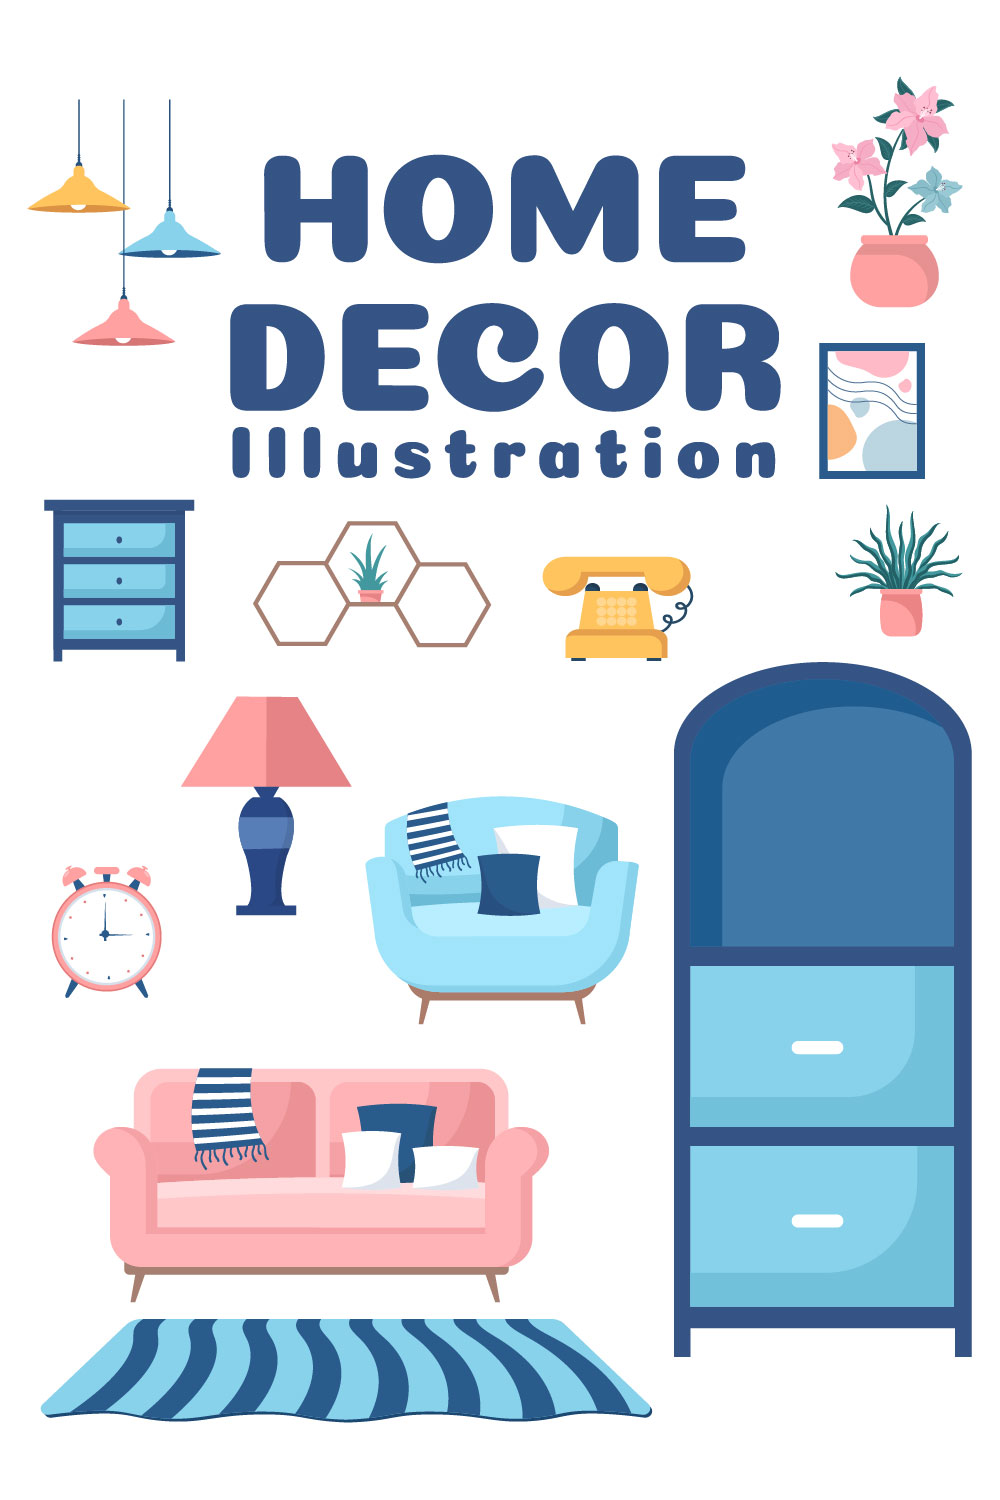 10 Home Decor Living Room Illustration pinterest image.